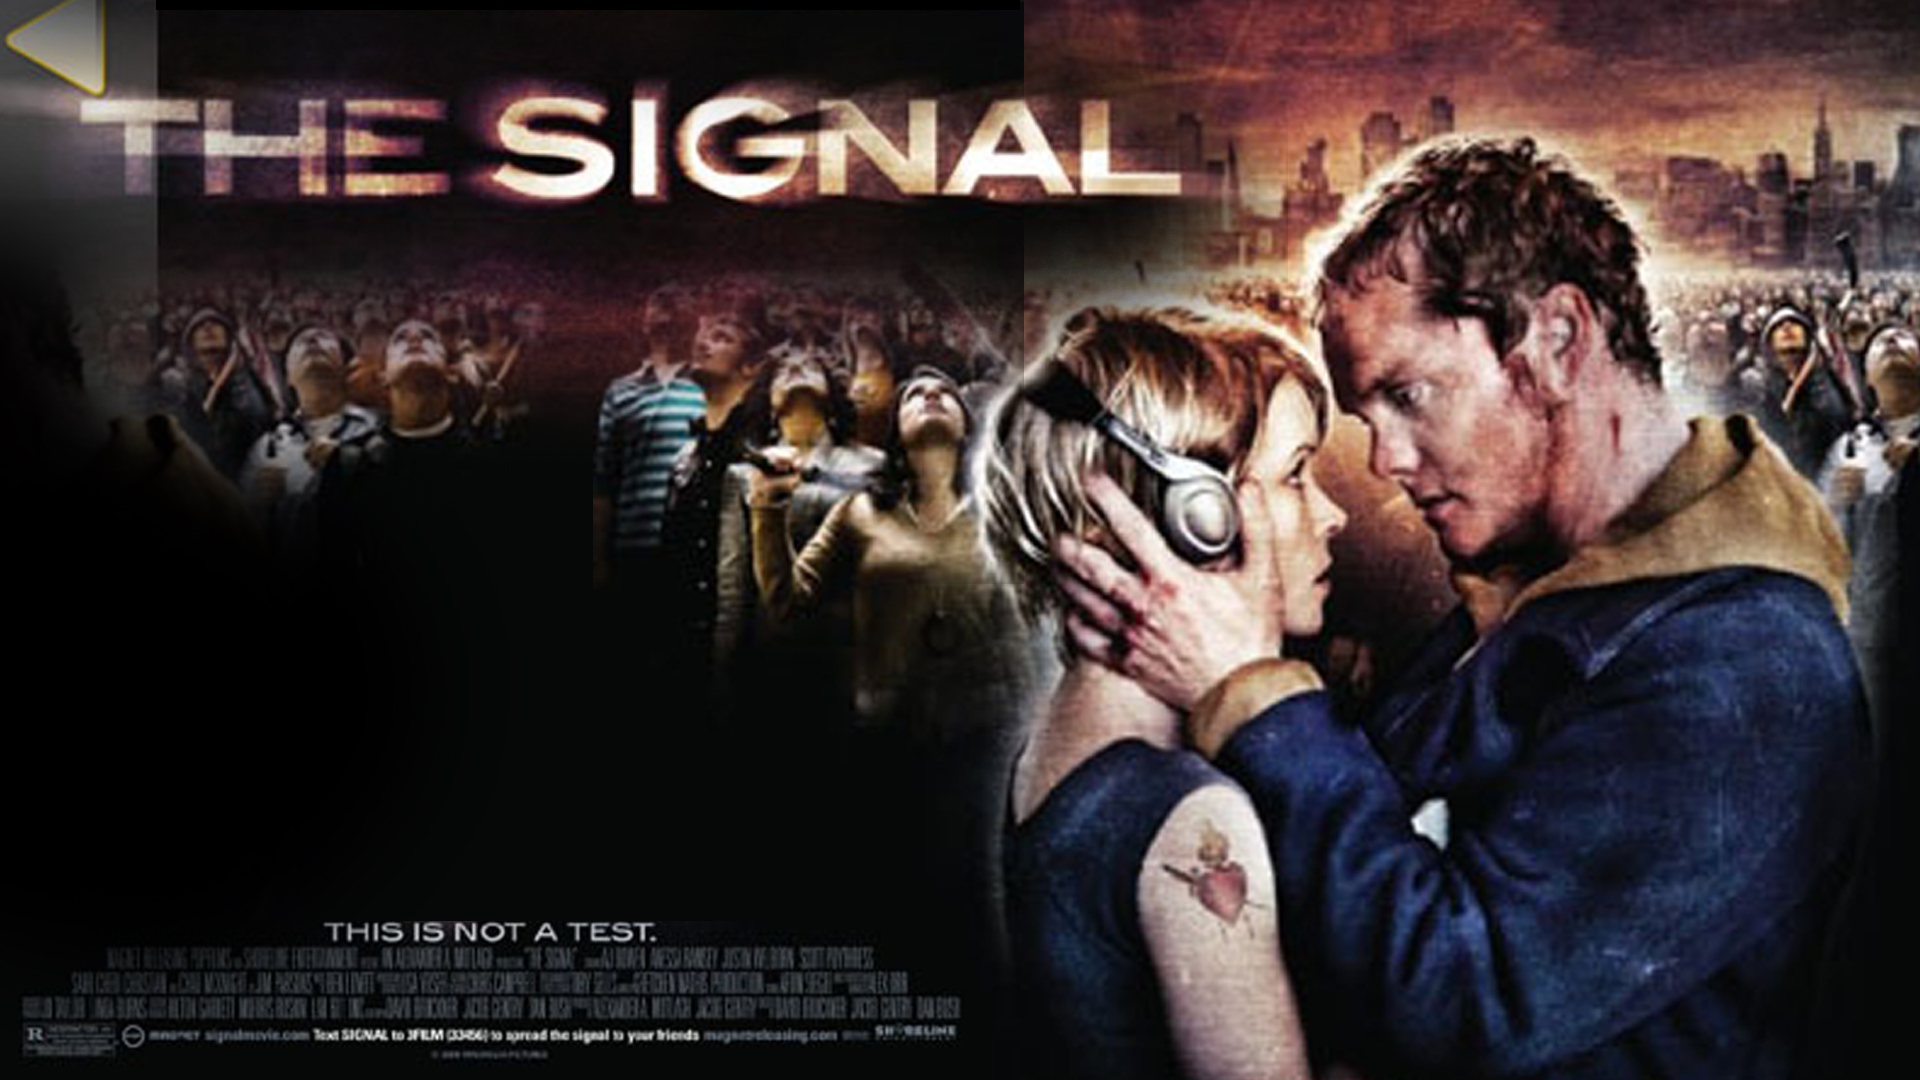 THE SIGNAL – FILM